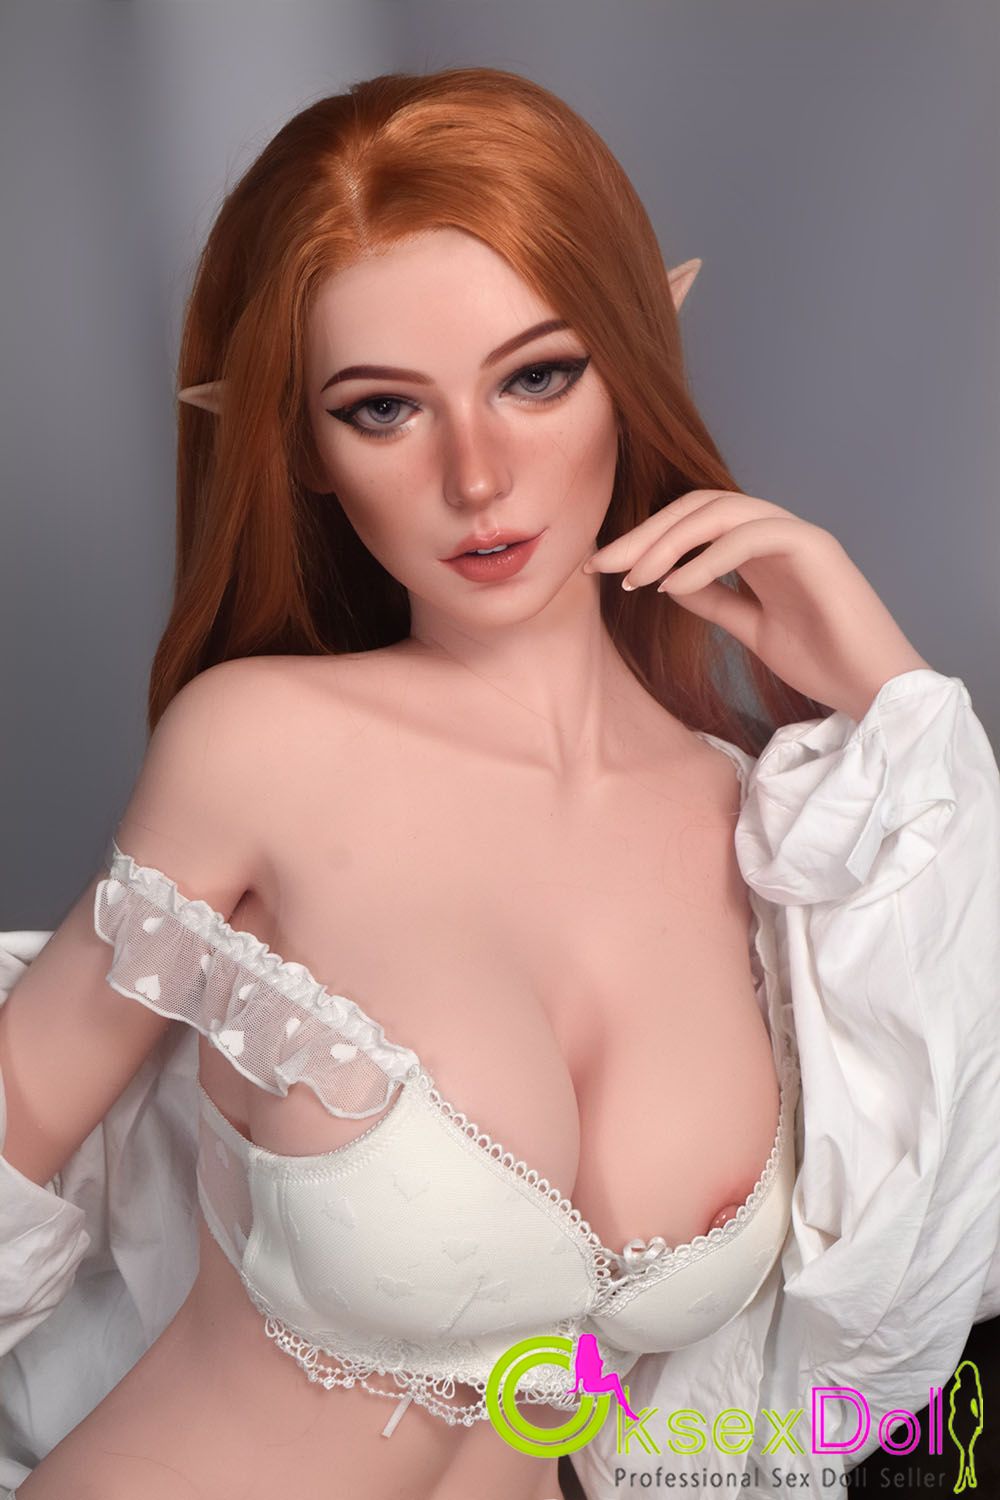 Fantasy sex dolls pictures of Braelynn